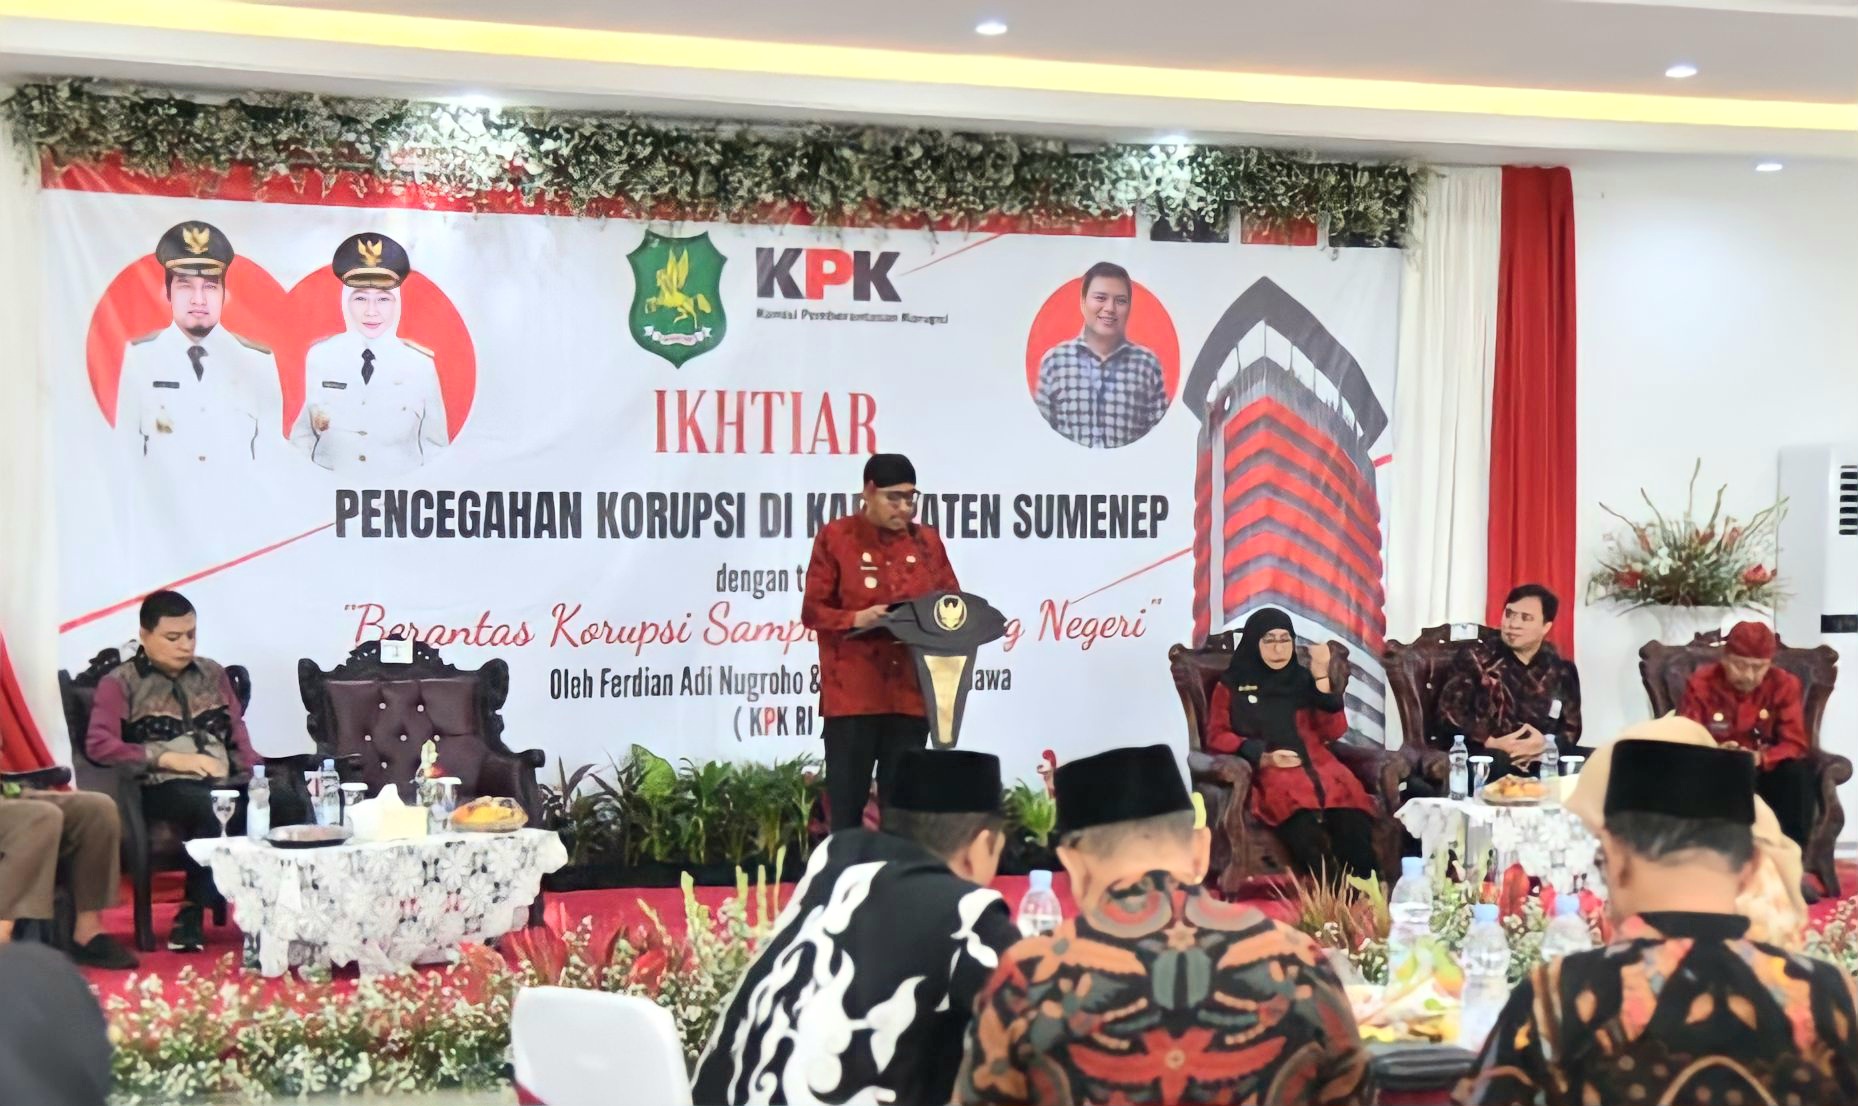 Bupati Sumenep, Achmad Fauzi saat sambutan di acara Sosialisasi Pencegahan Korupsi, di Islamic Center Bindara Saod Kecamatan Batuan.